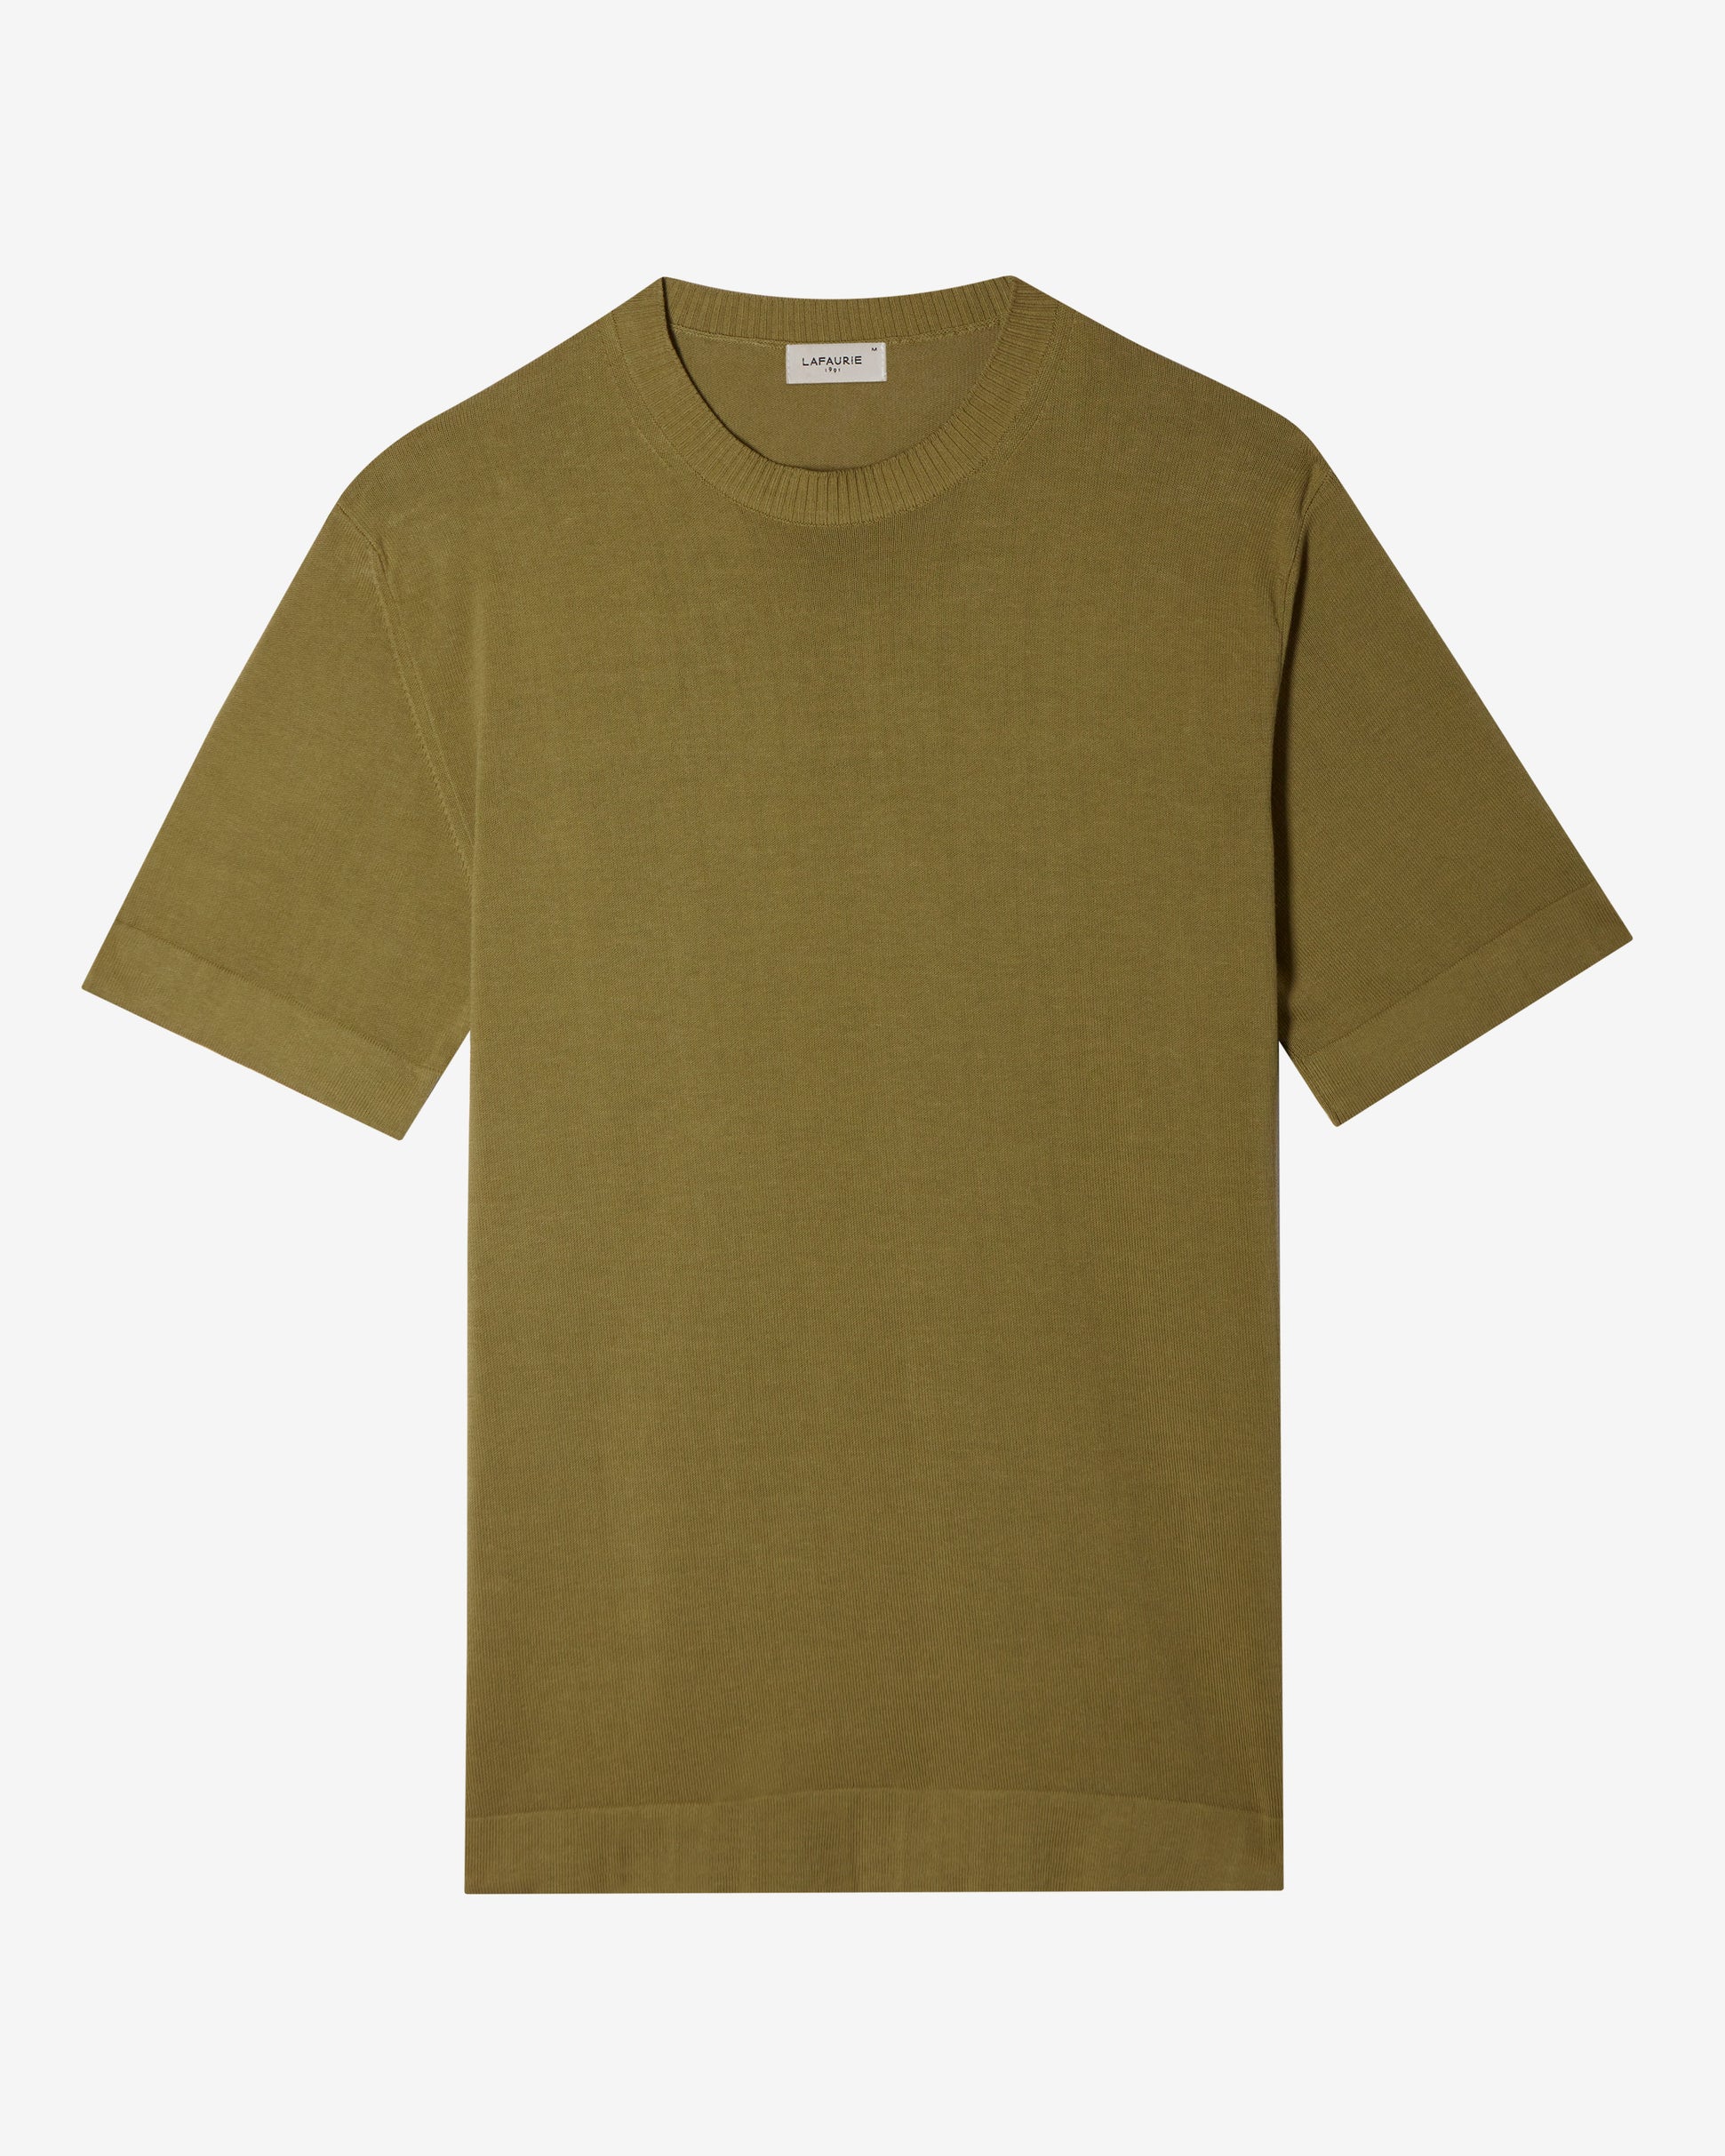 DAZIO T-shirt - Olive